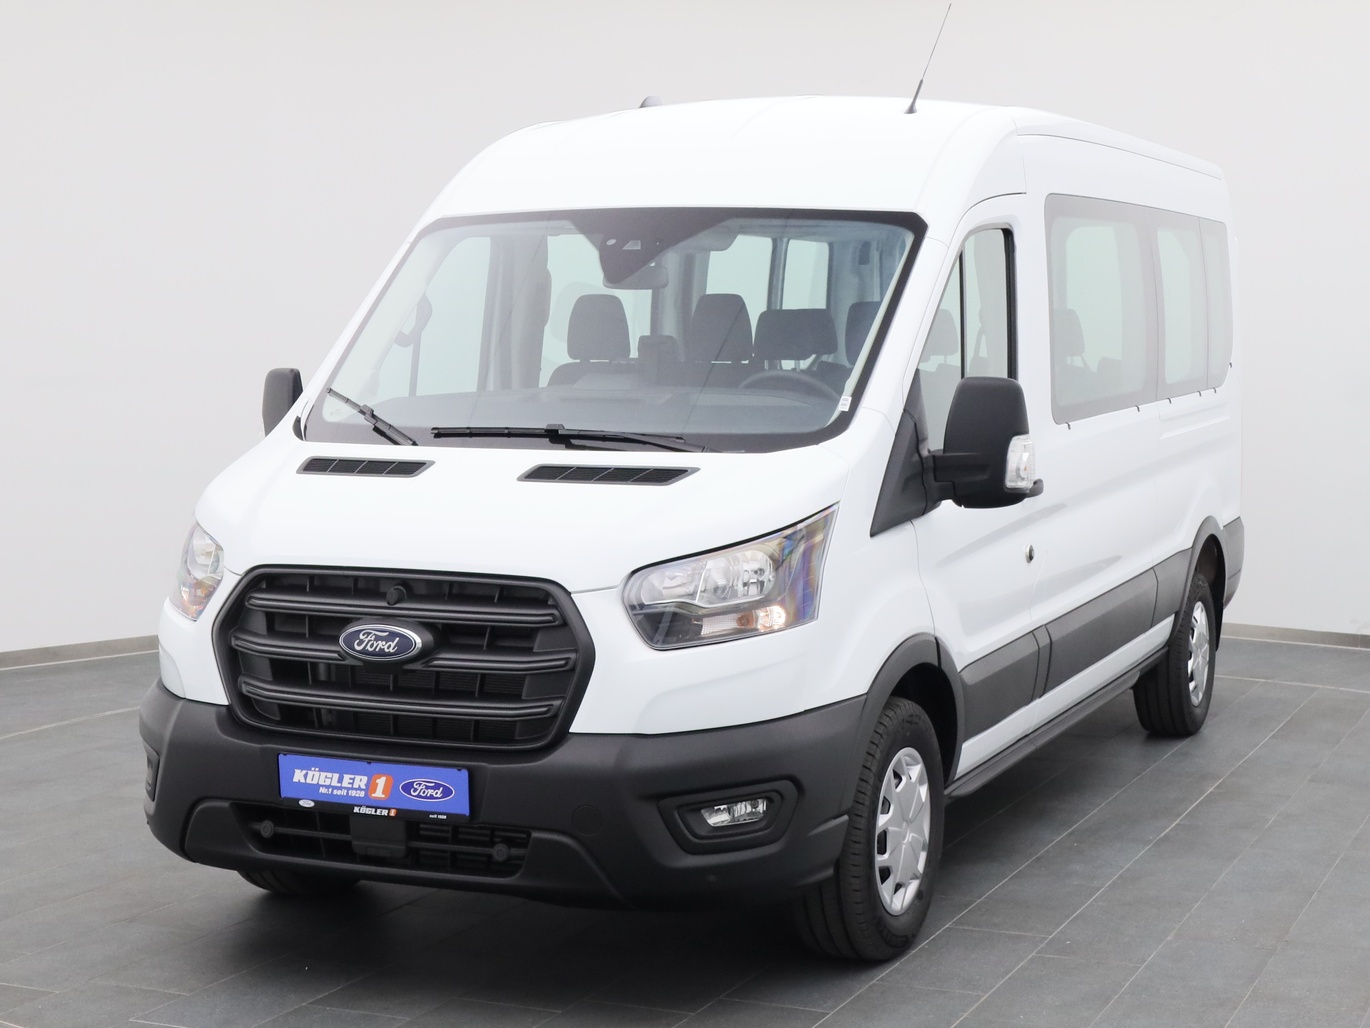  Ford Transit Kombi 350 L3H2 Trend 150PS / Klima in Weiss 